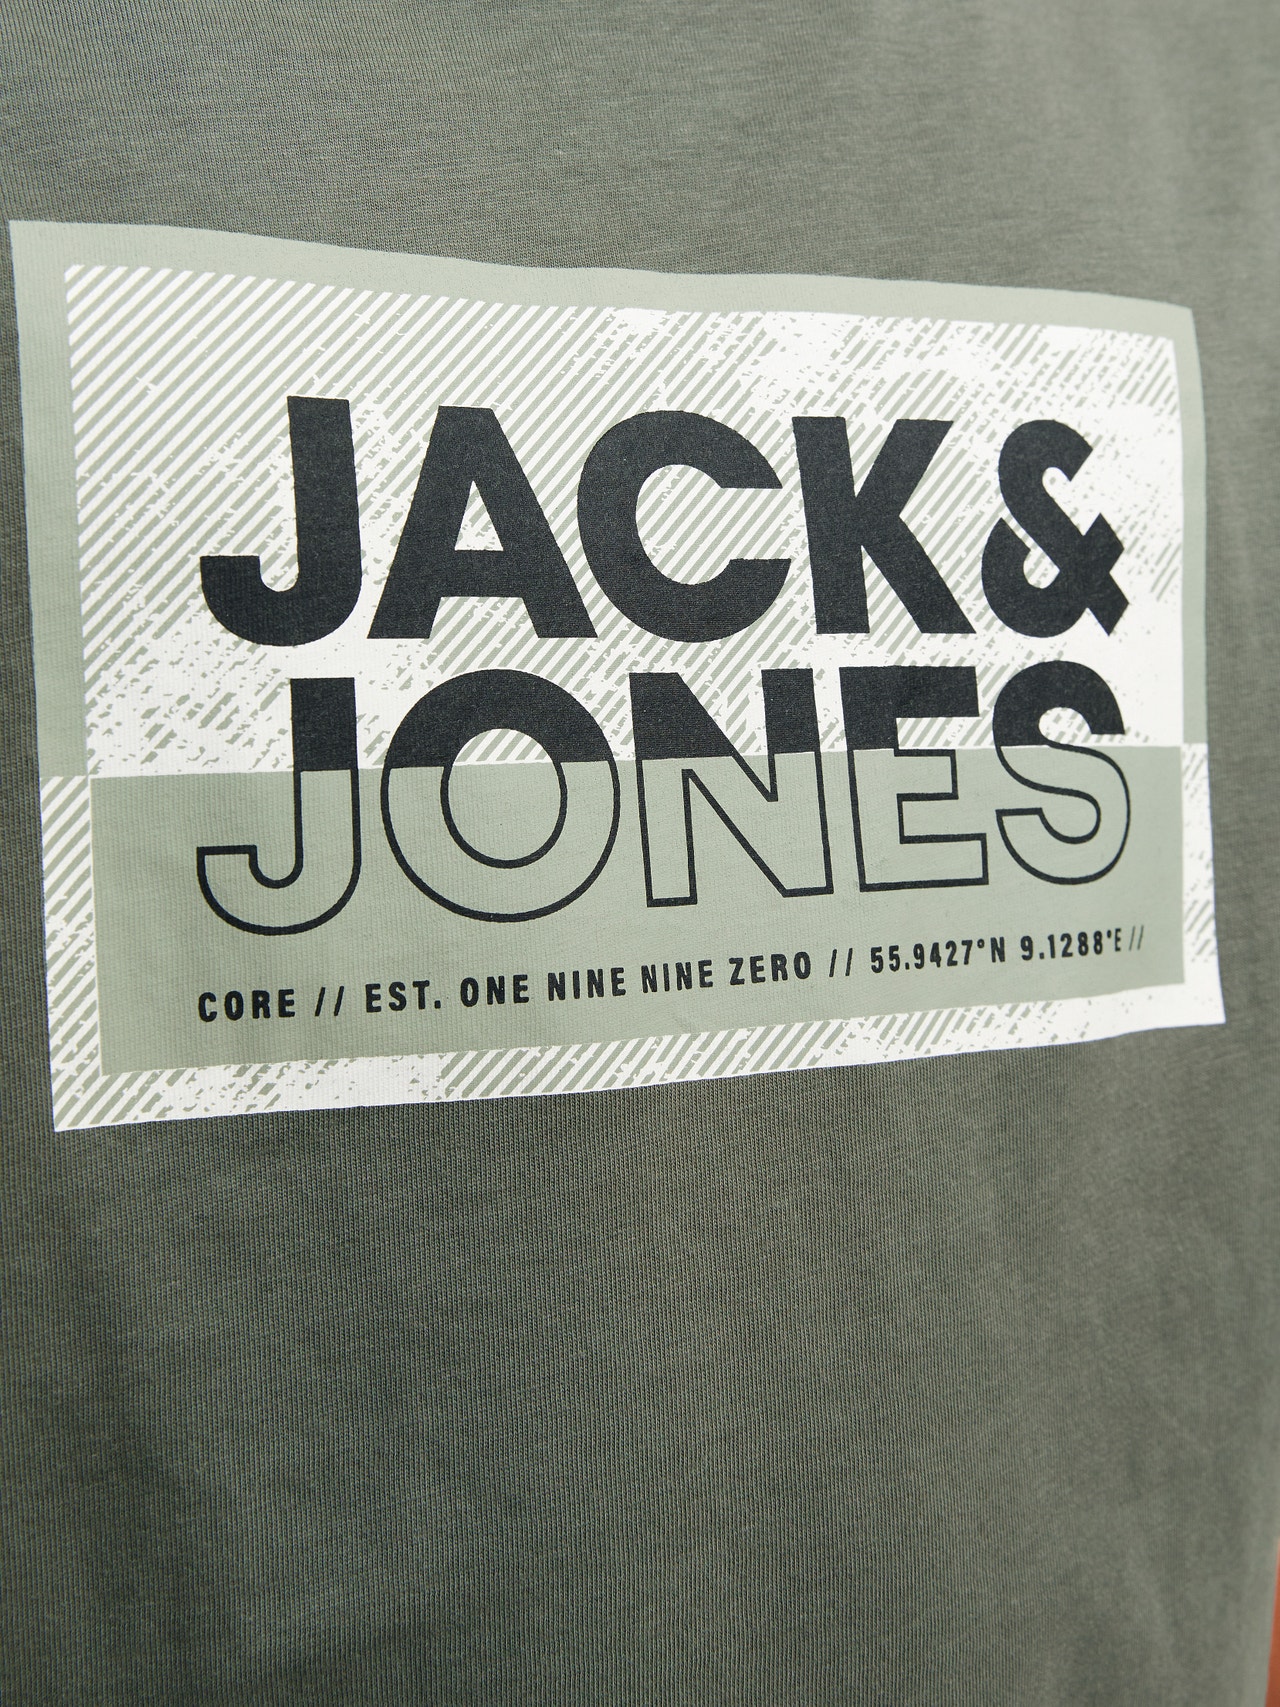 Jack & Jones Poikien Logo T-paita -Agave Green - 12254194